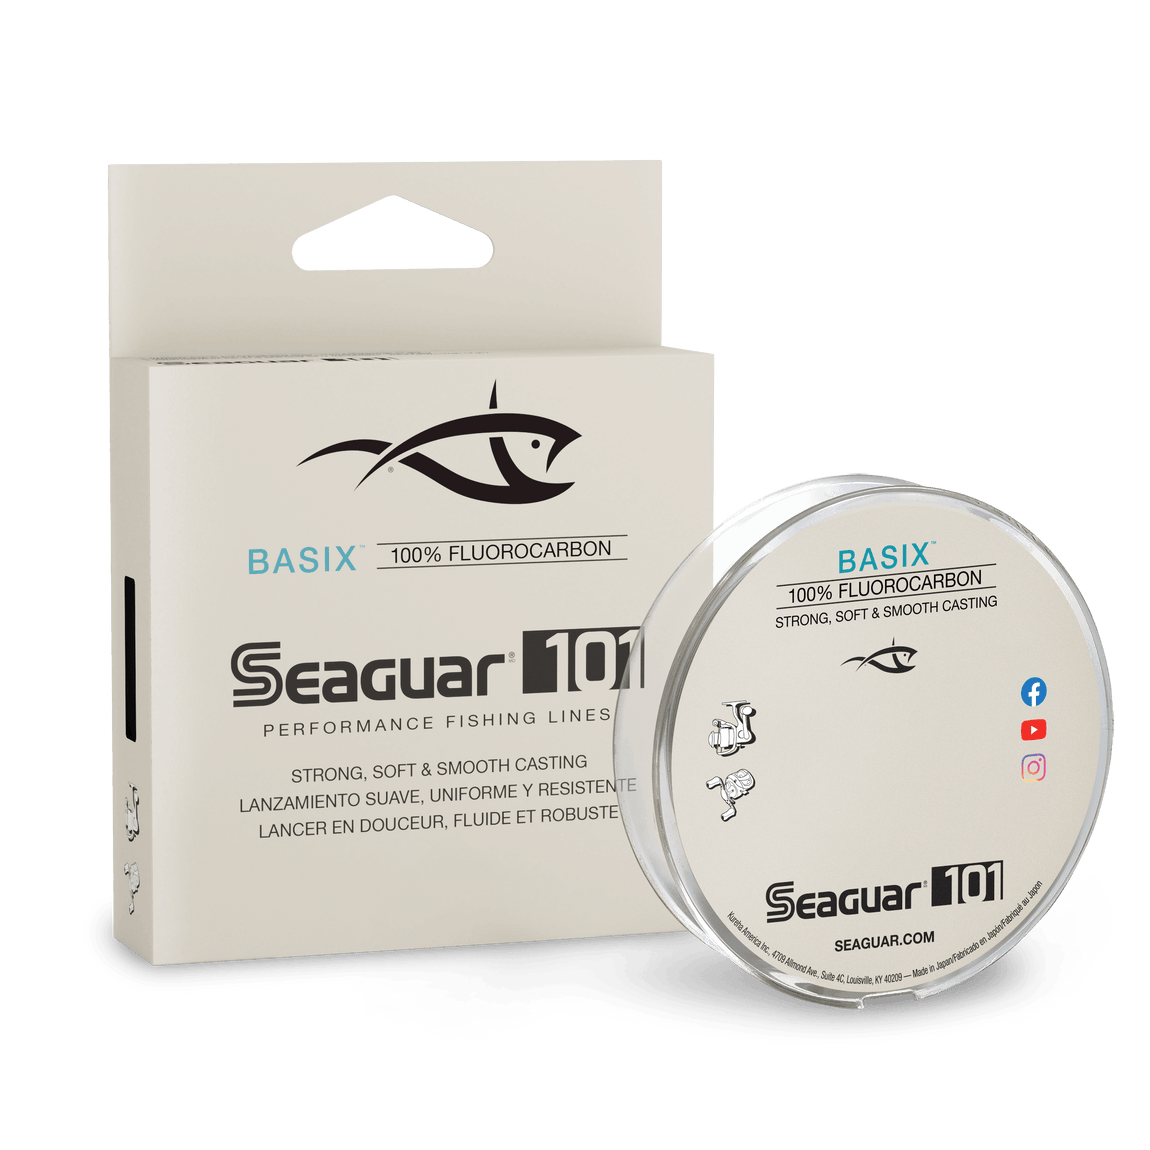 Seaguar Reveals New Entry Level BasiX™ Fluorocarbon Fishing Line